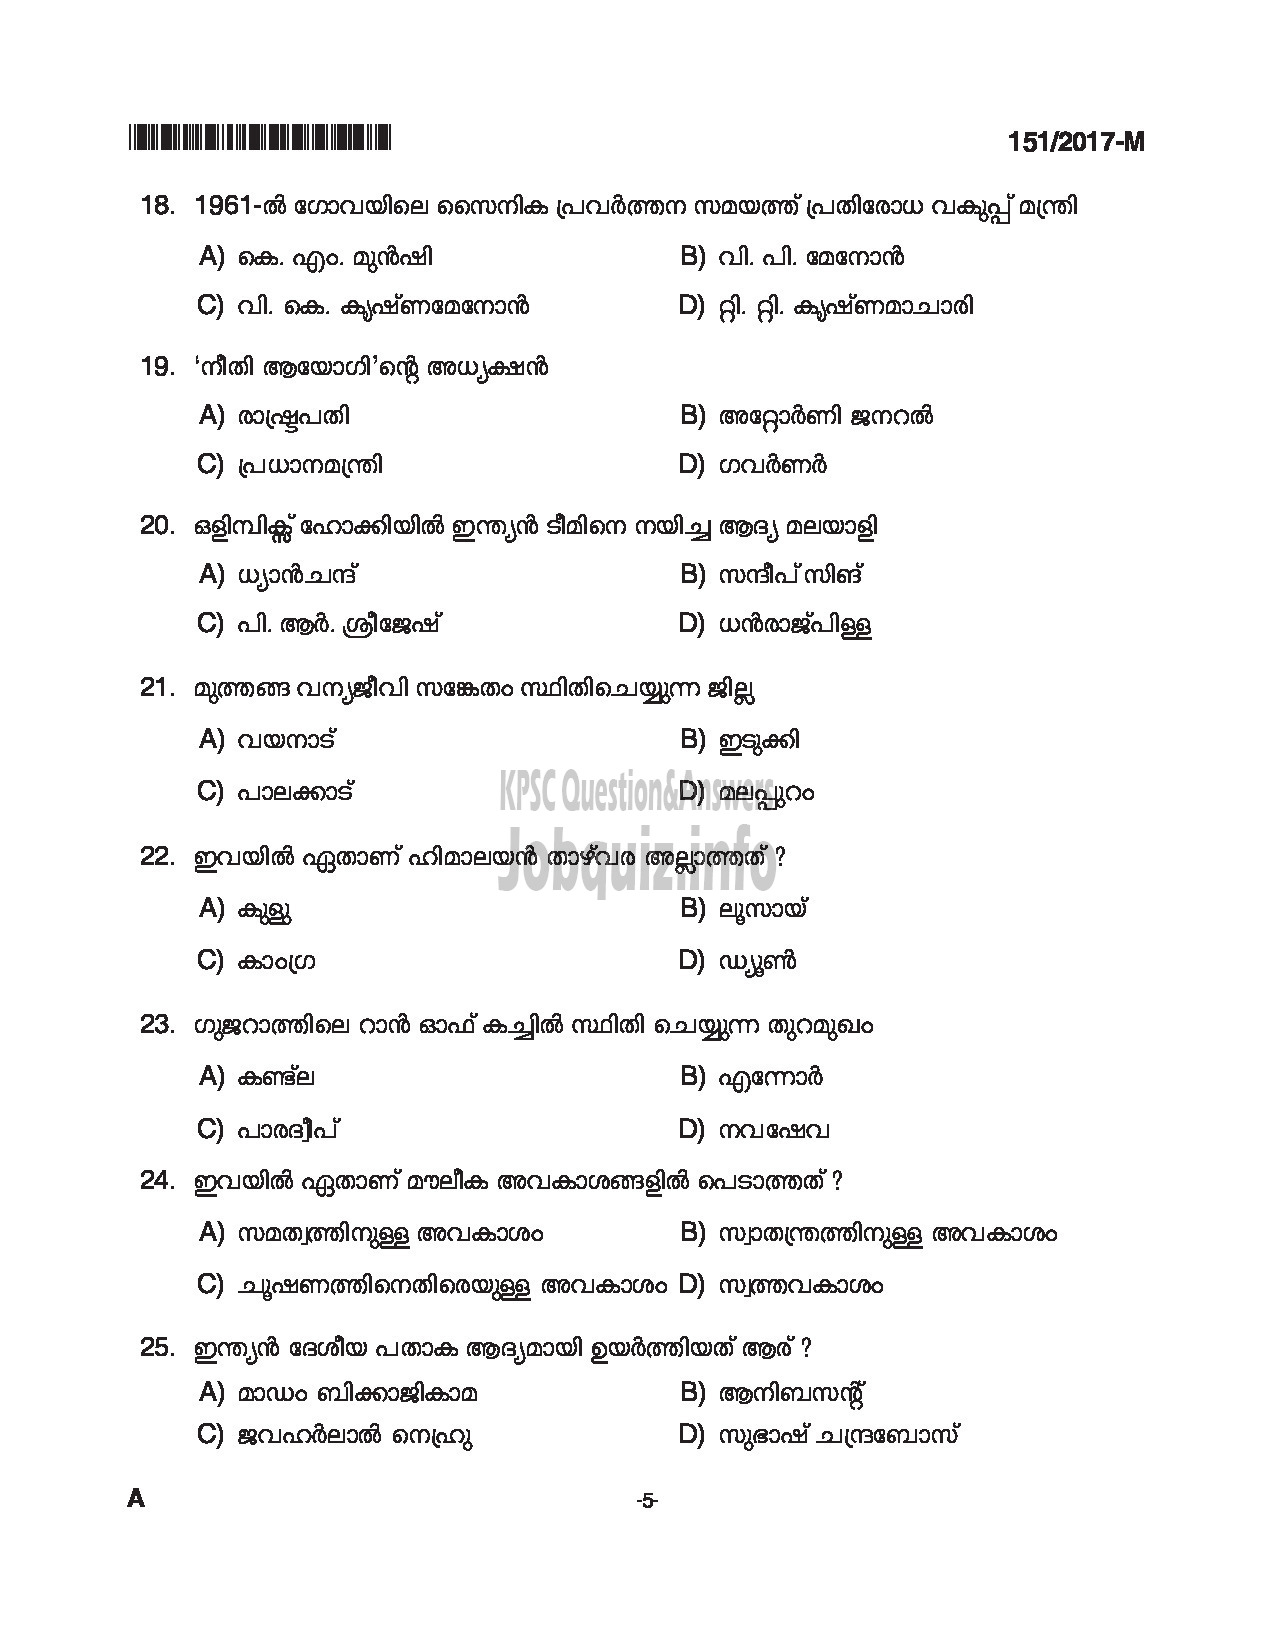 Kerala PSC Question Paper - SALESMAN/SALESWOMEN GENERAL CATEGORY HANTEX LTD MALAYALAM-5